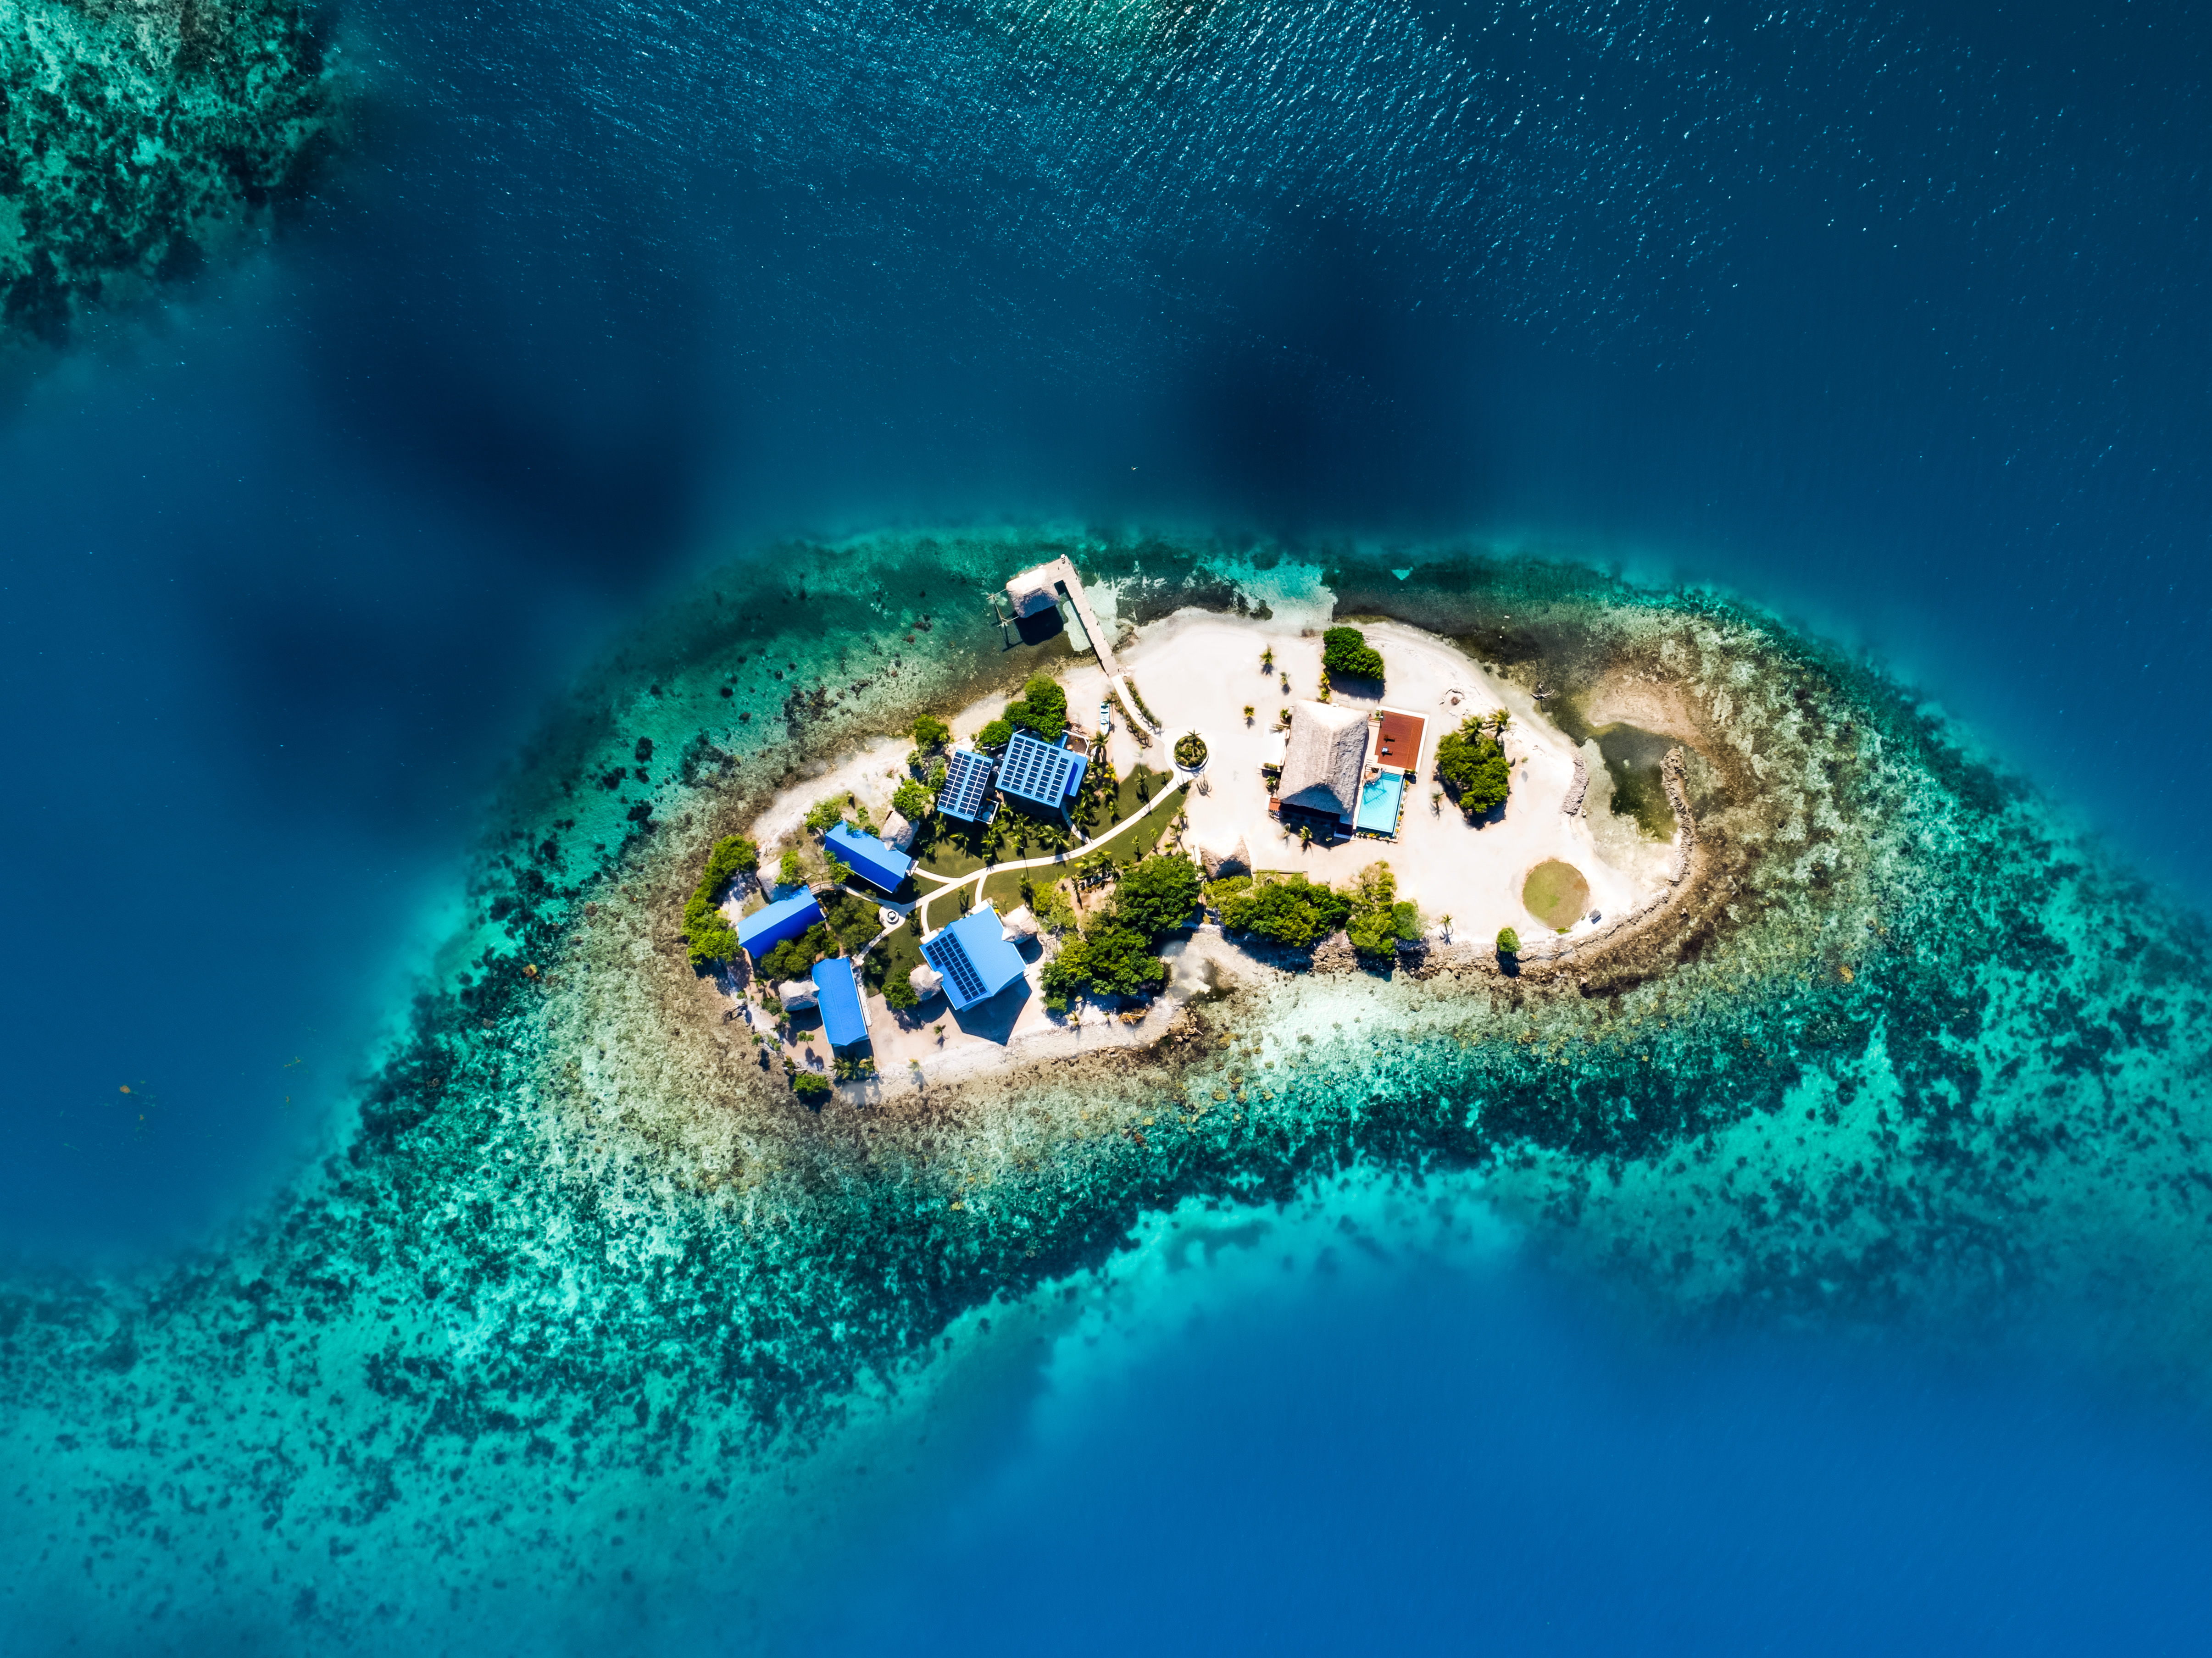 Kanu Private Island - Belize, Central America - Private Islands for Rent